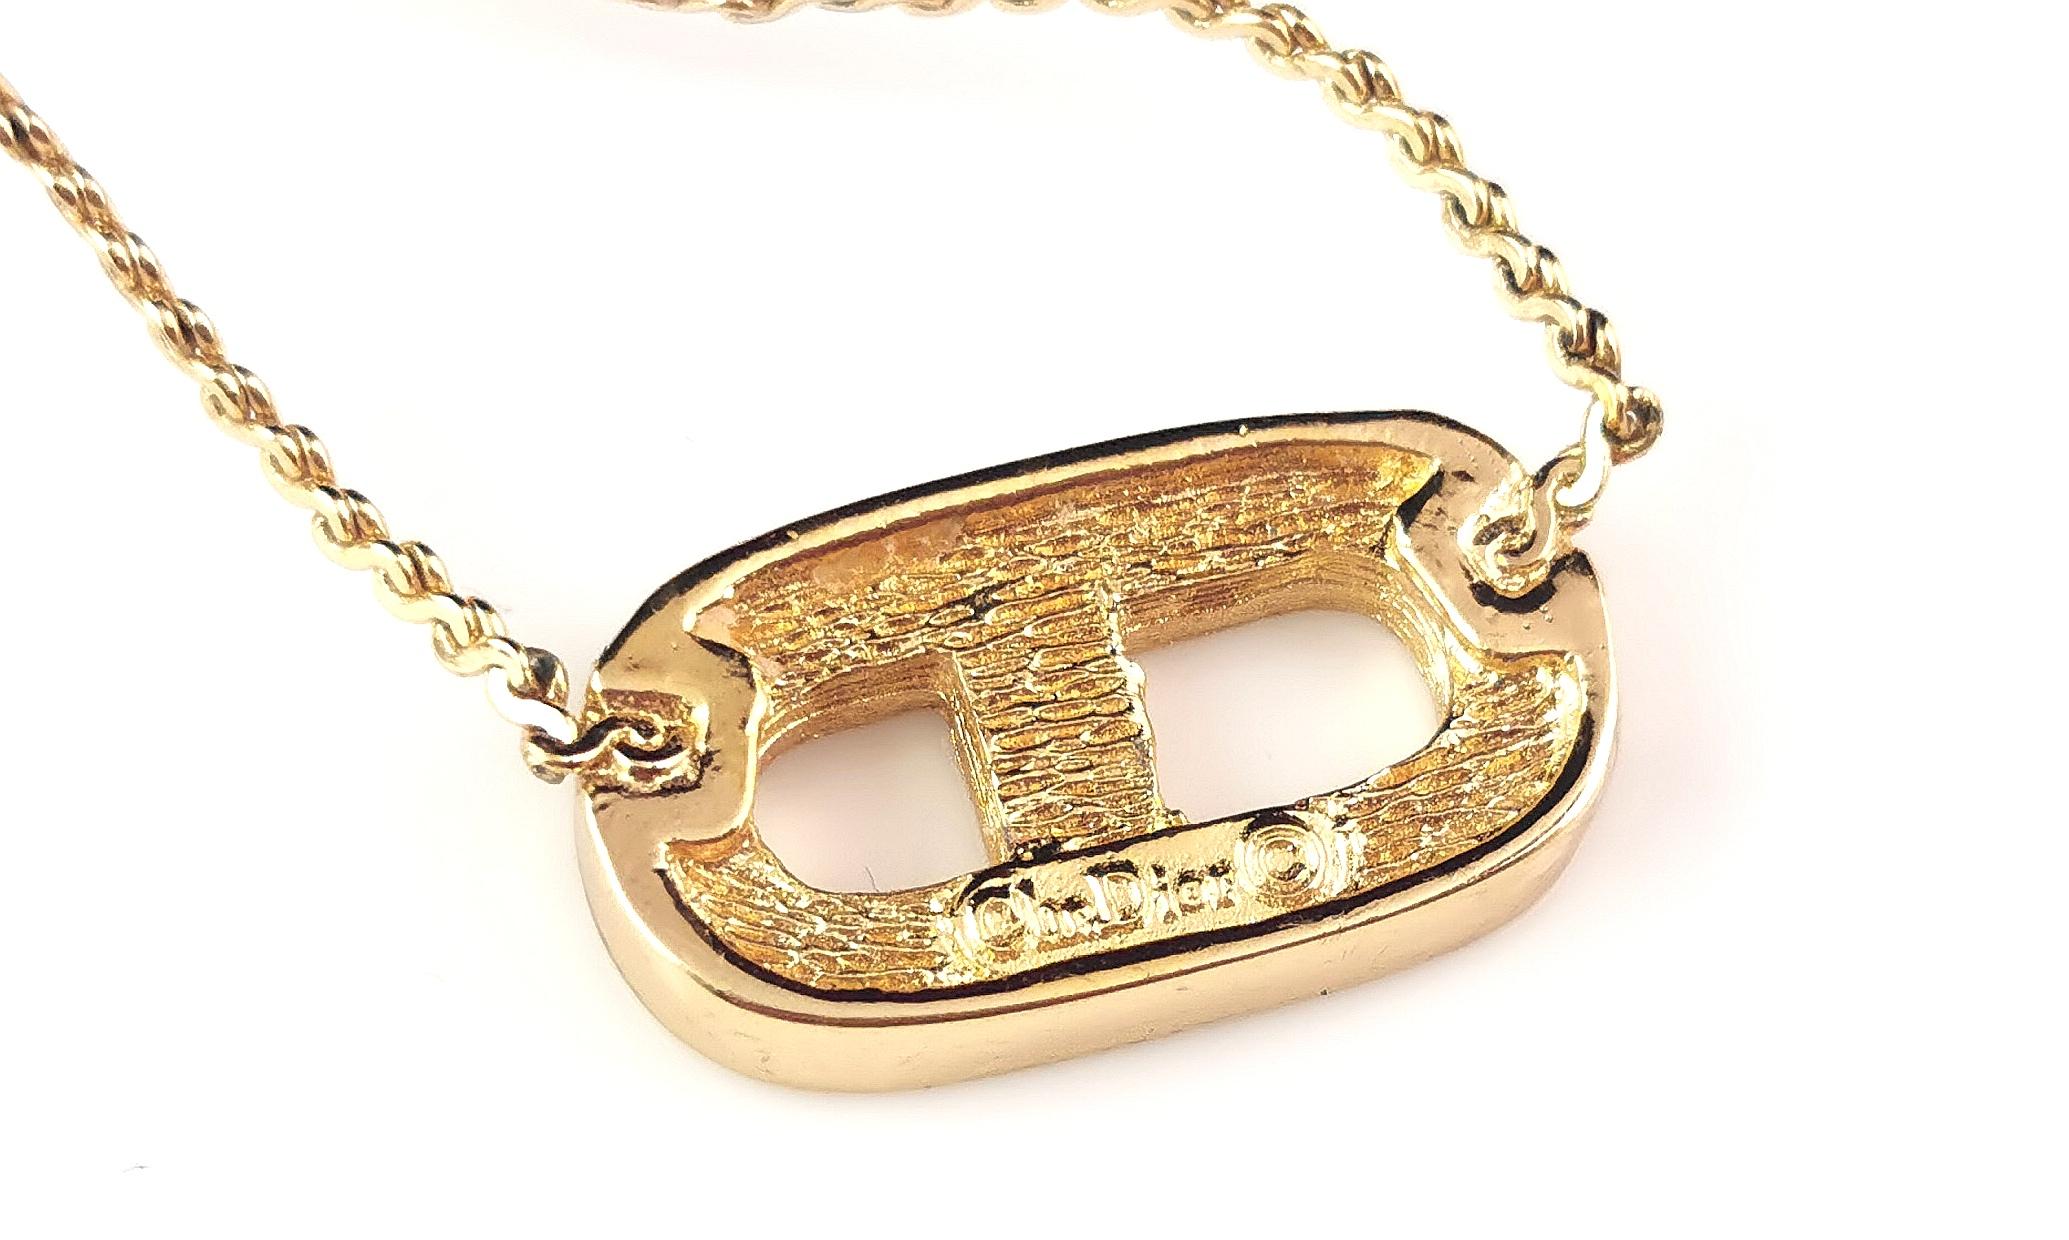  Vintage Christian Dior gold tone diamante logo pendant necklace  For Sale 2